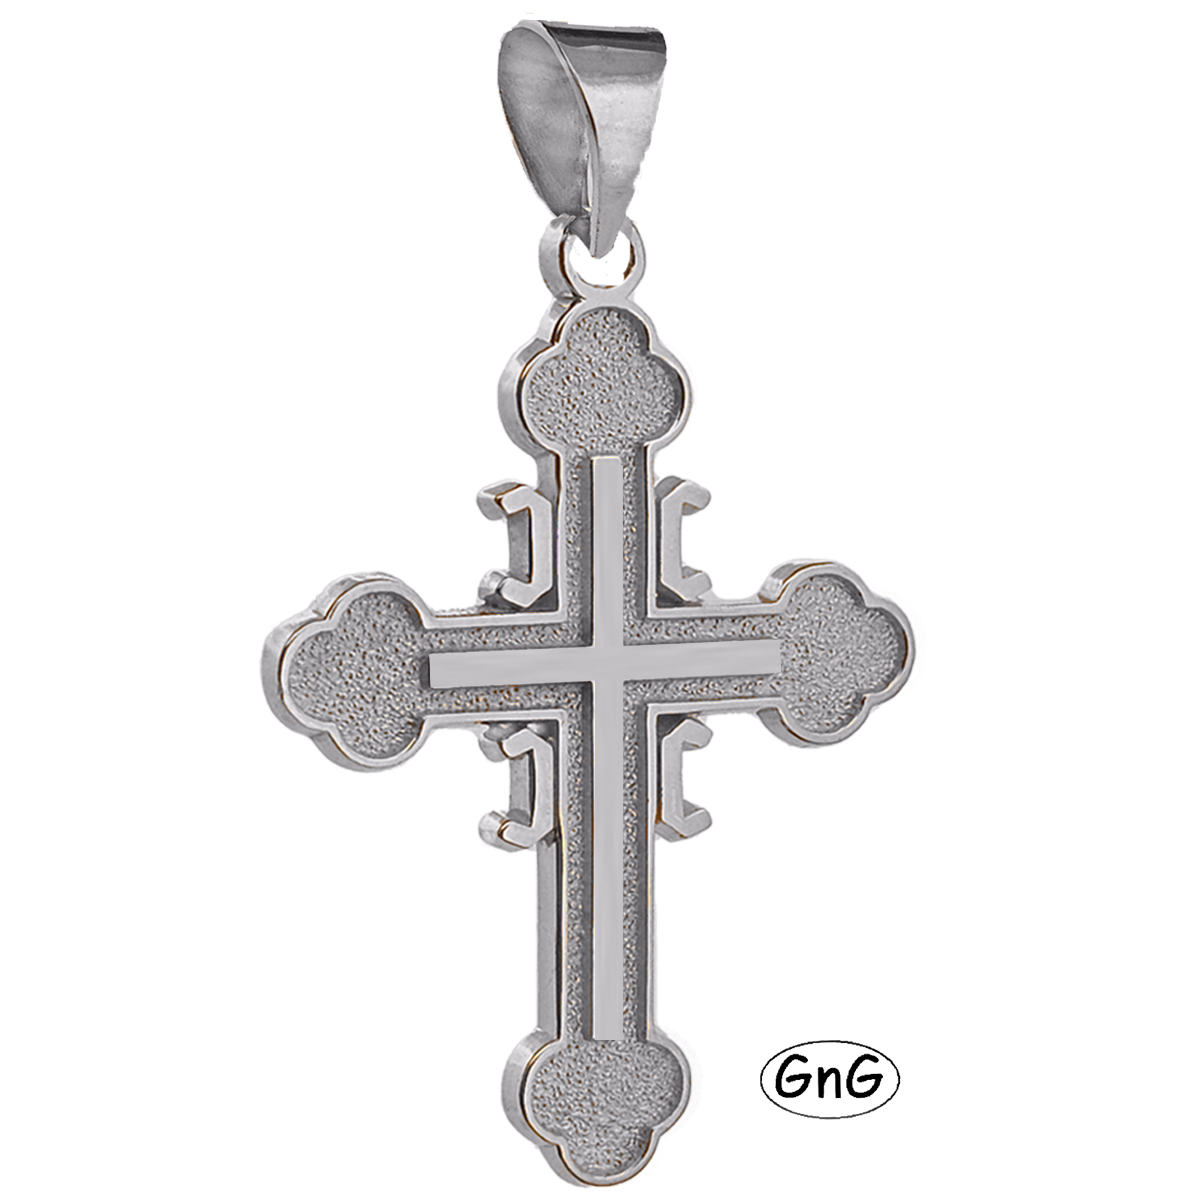 GE10, Gold Serbian Orthodox Cross, 4C, GnG Design